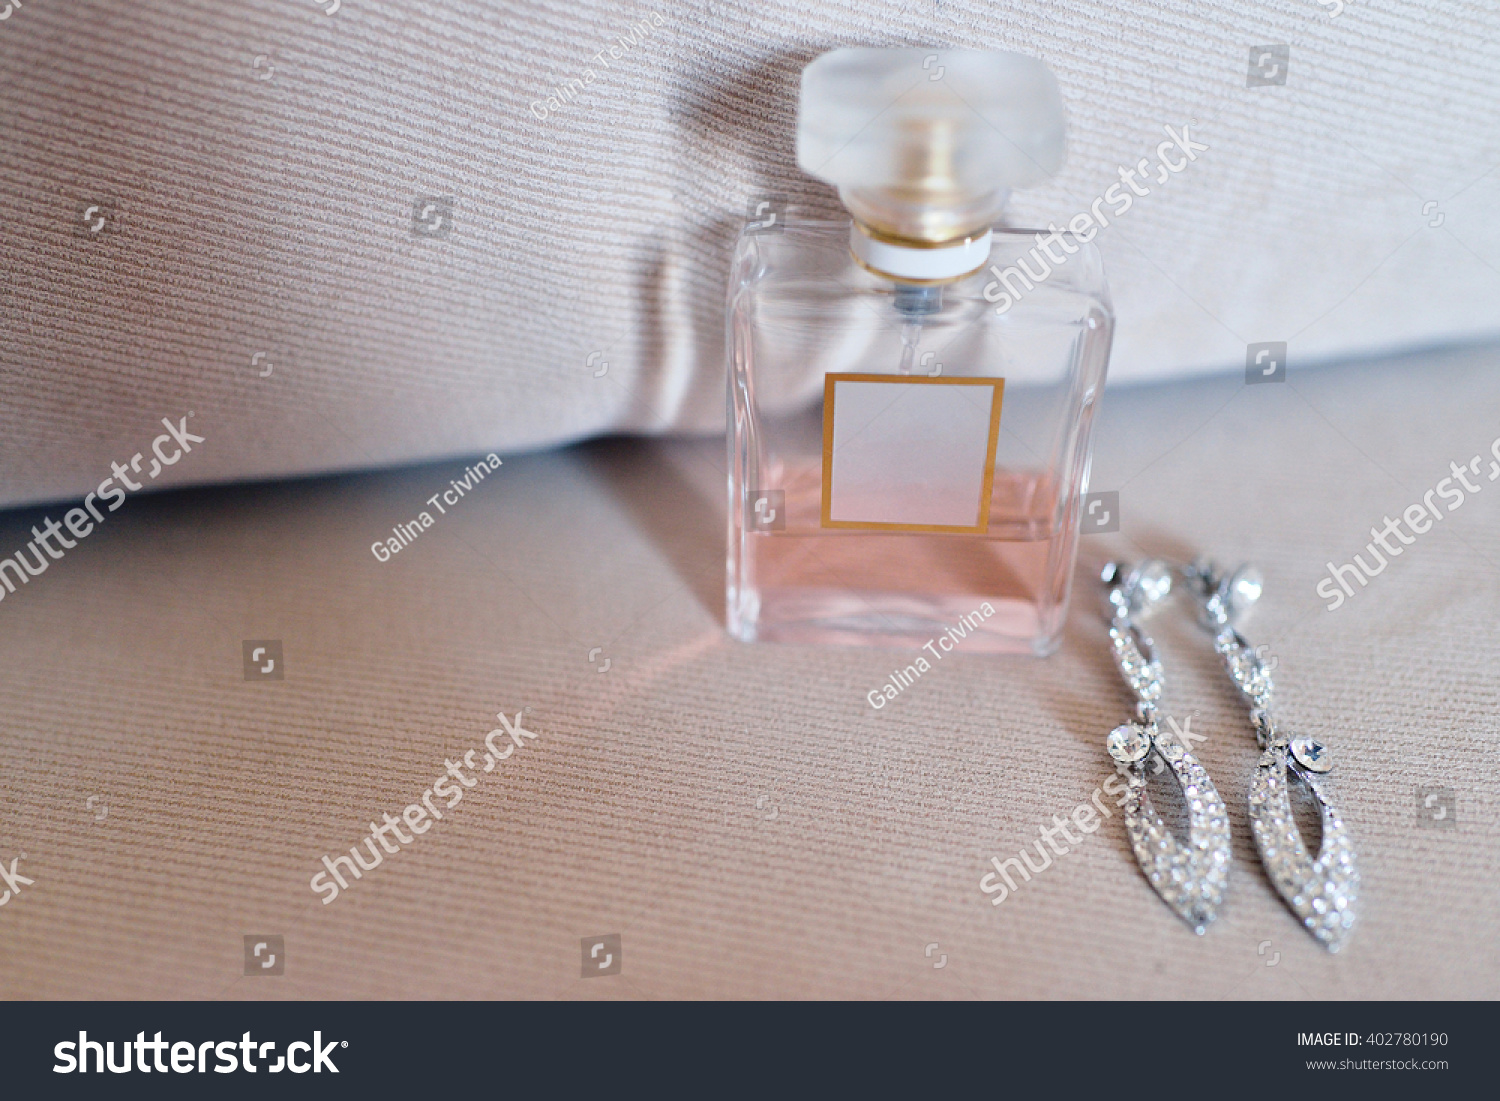 bride crystal perfume